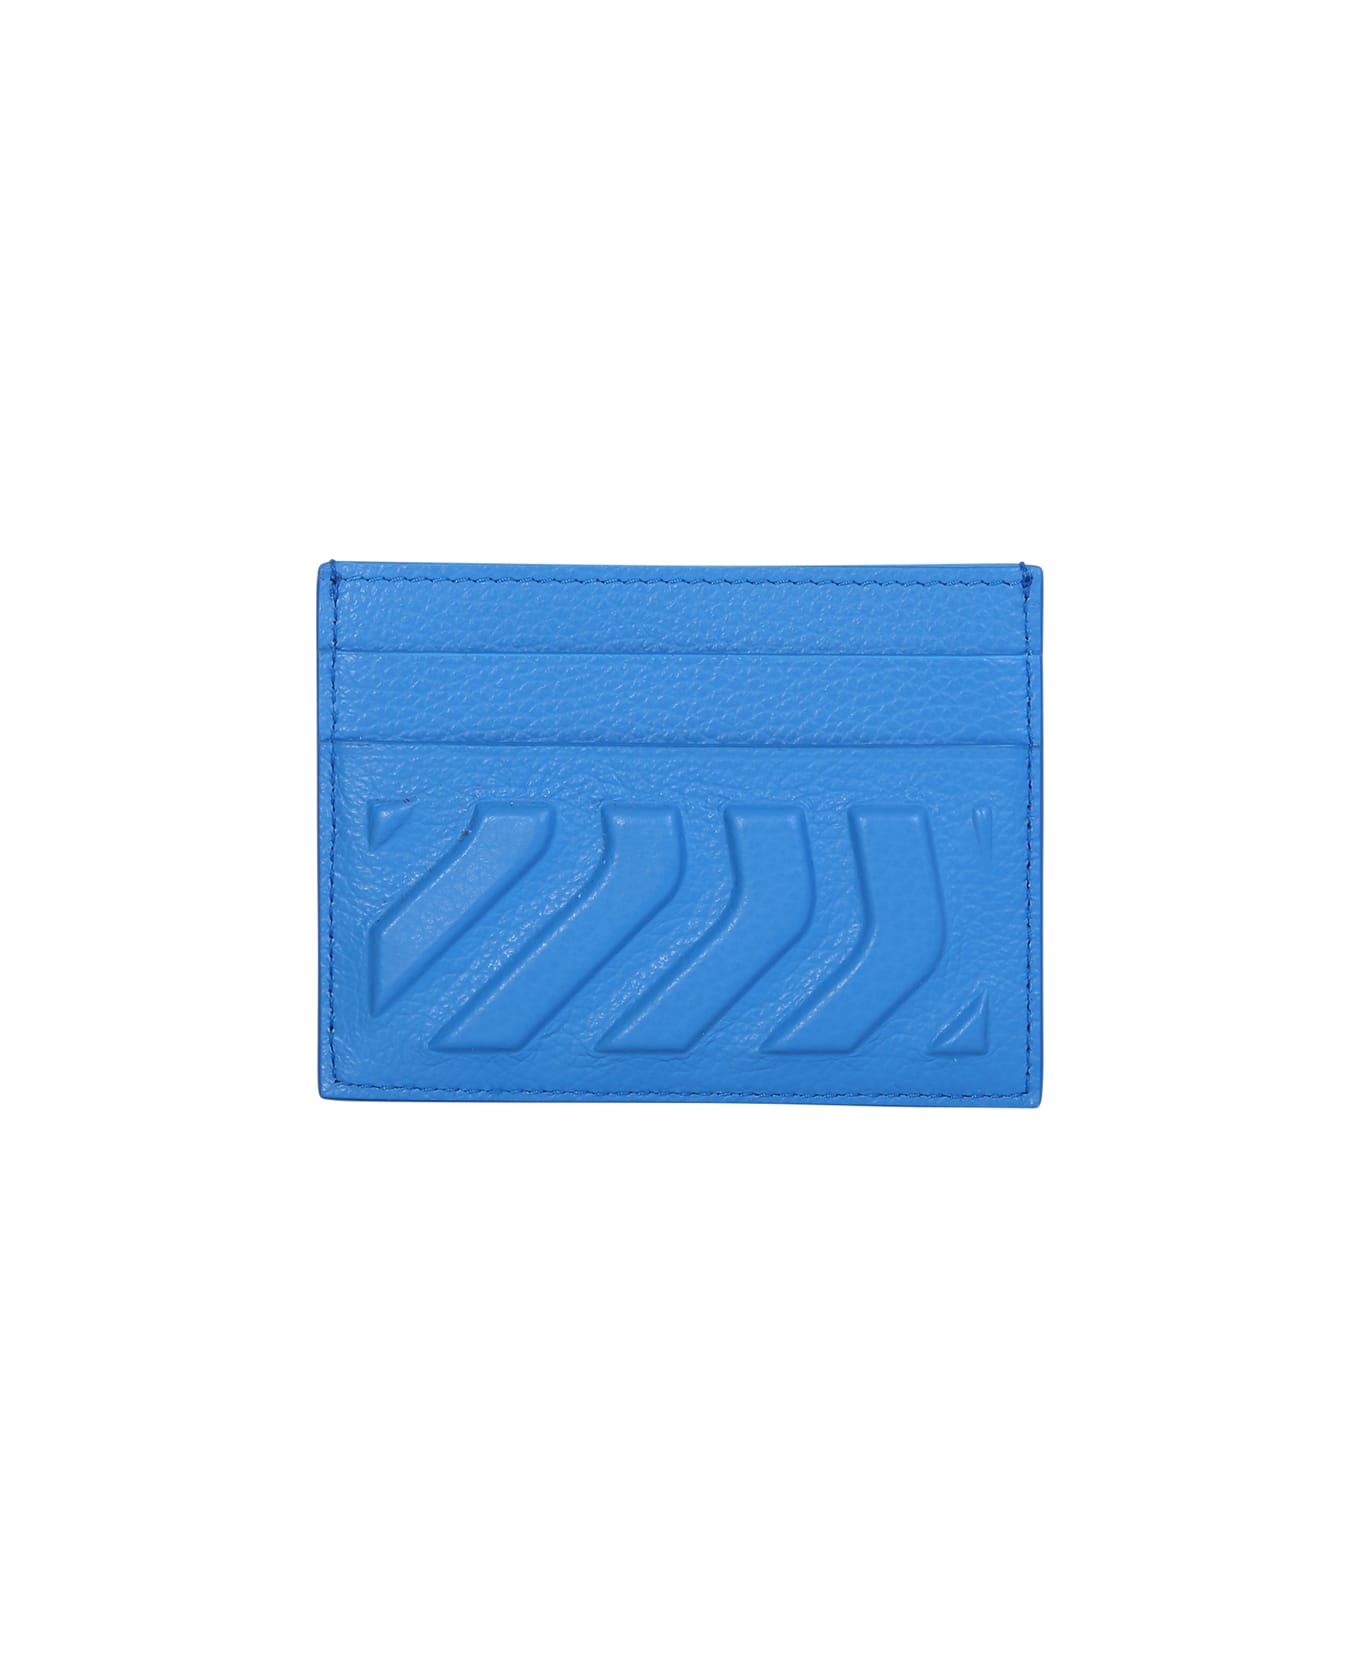 Balenciaga Car Cardholder Grained Calfskin Leather Azure - Blue